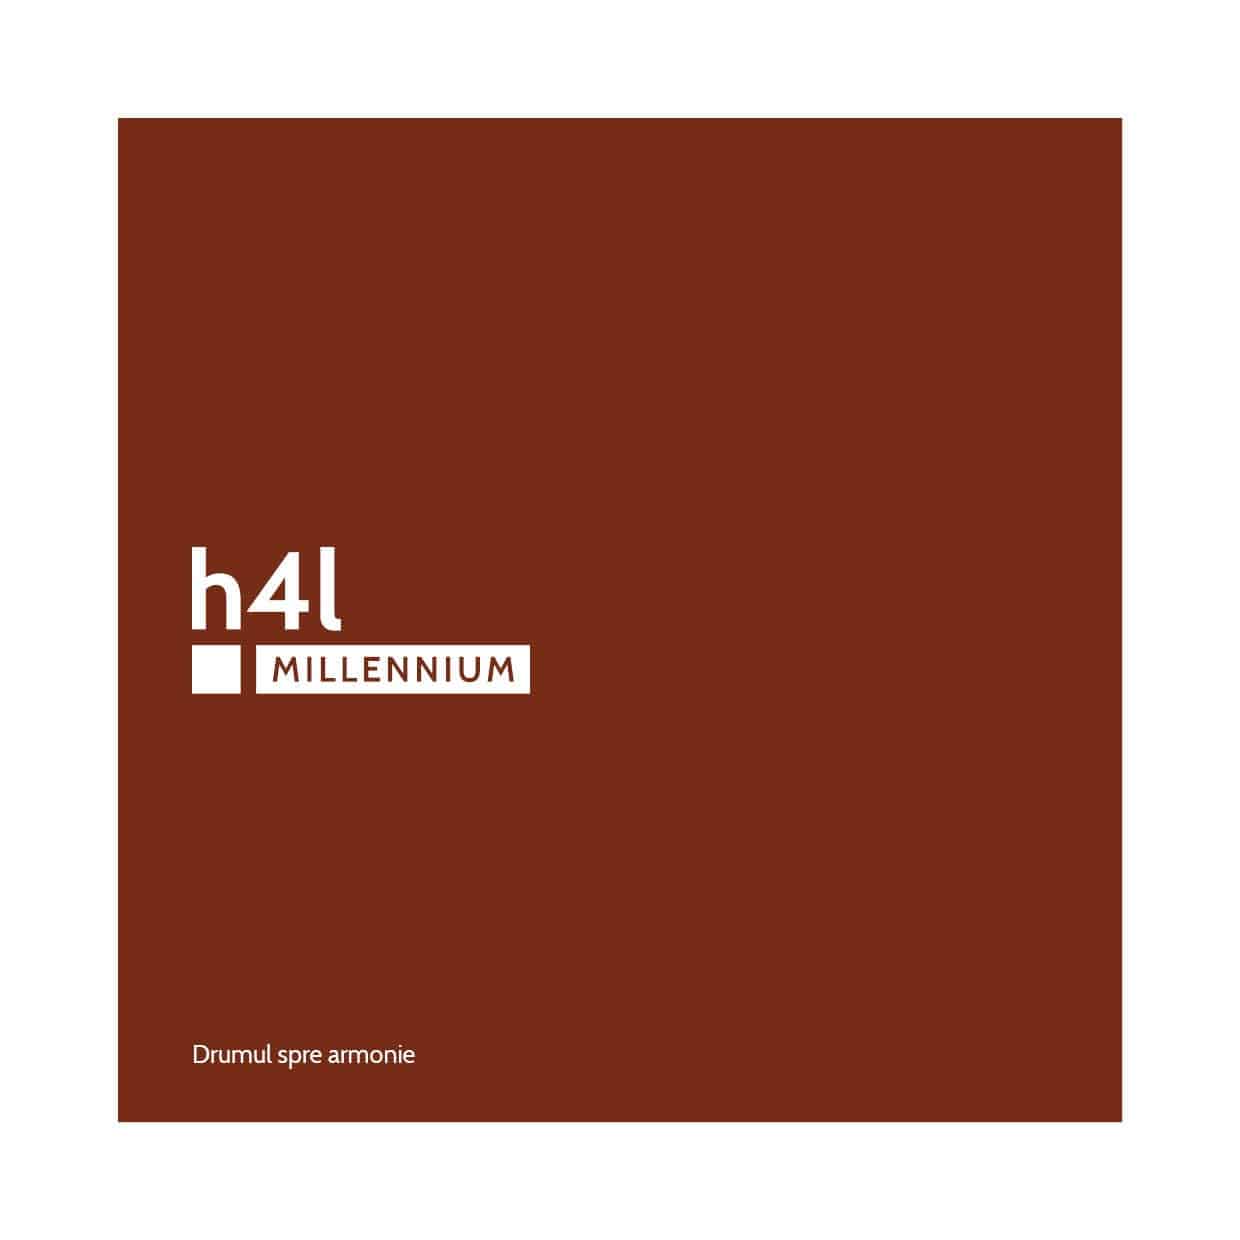 h4l, h4l MILLENNIUM, home 4 life, branding, design